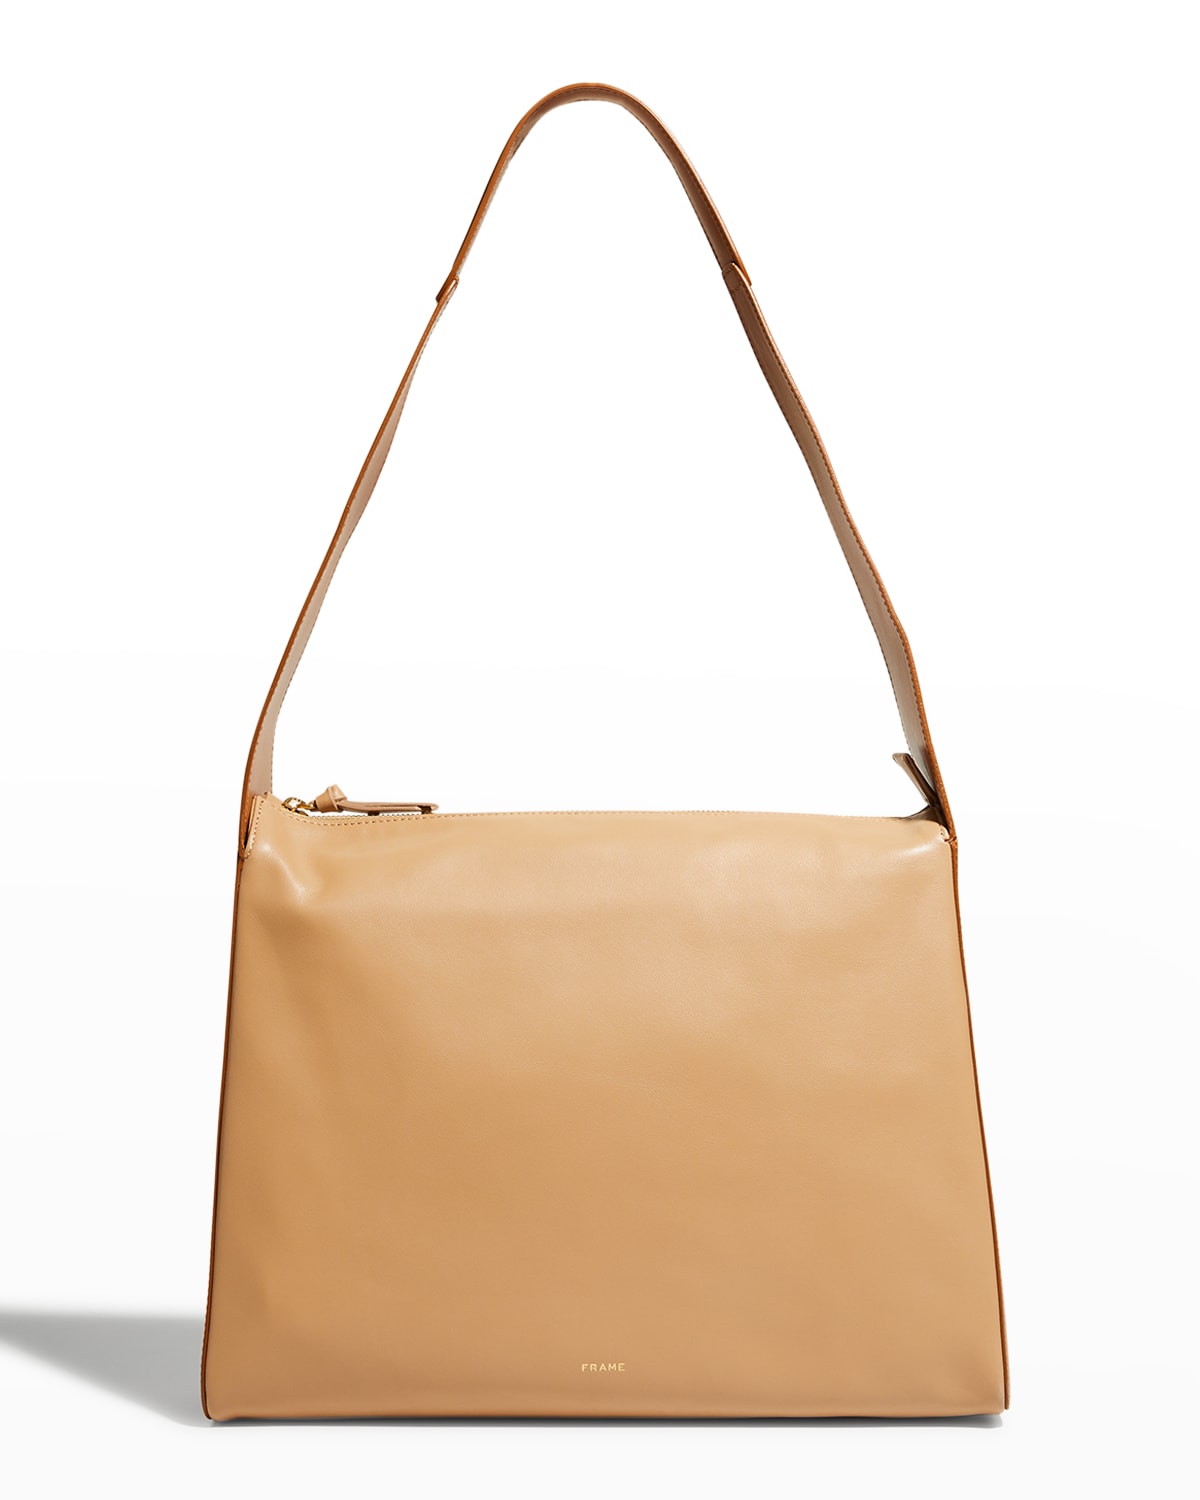 Van Caro Laser Waist Bag Fanny Pack Waterproof Travel Crossbody Casual Chest Bag Shoulder Bag for Unisex 